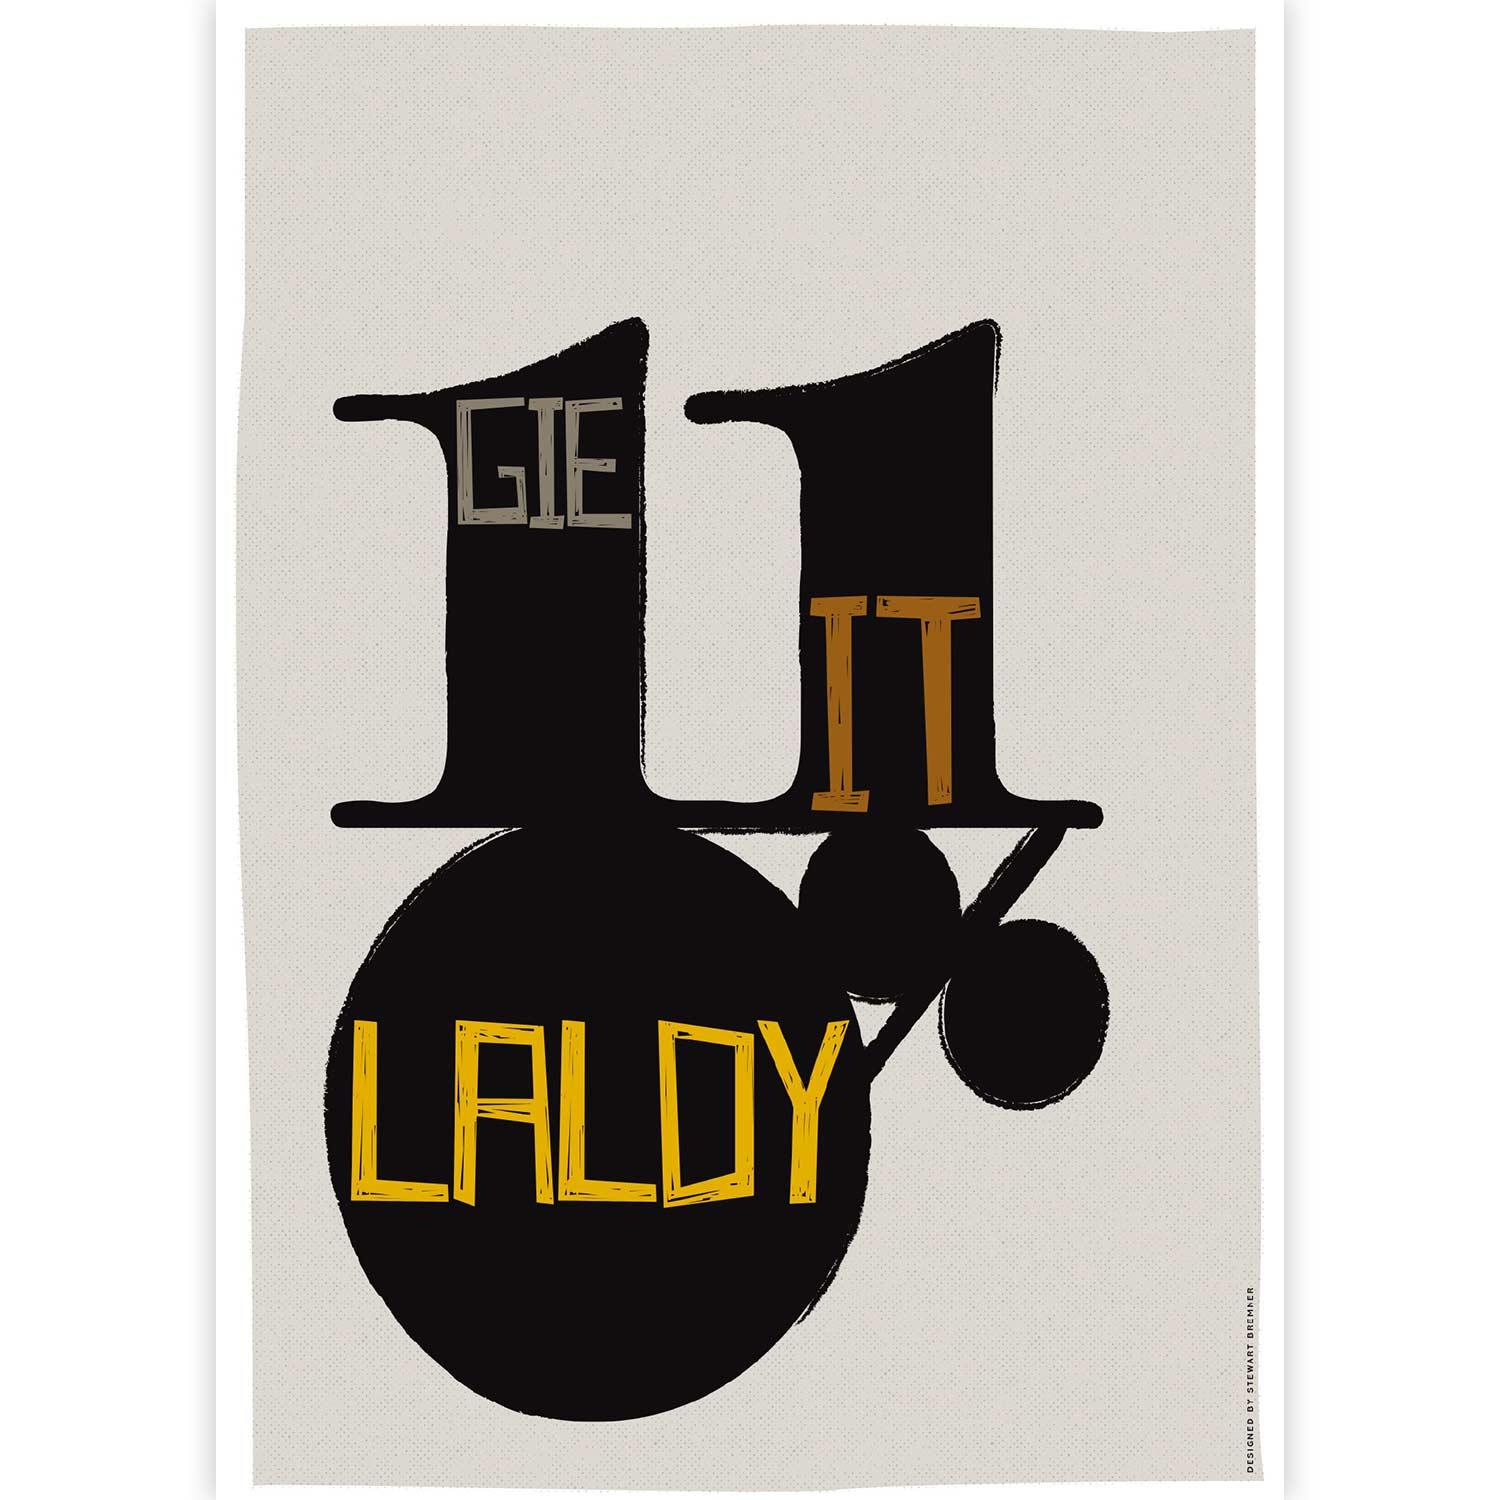 Gie it Laldy by Stewart Bremner